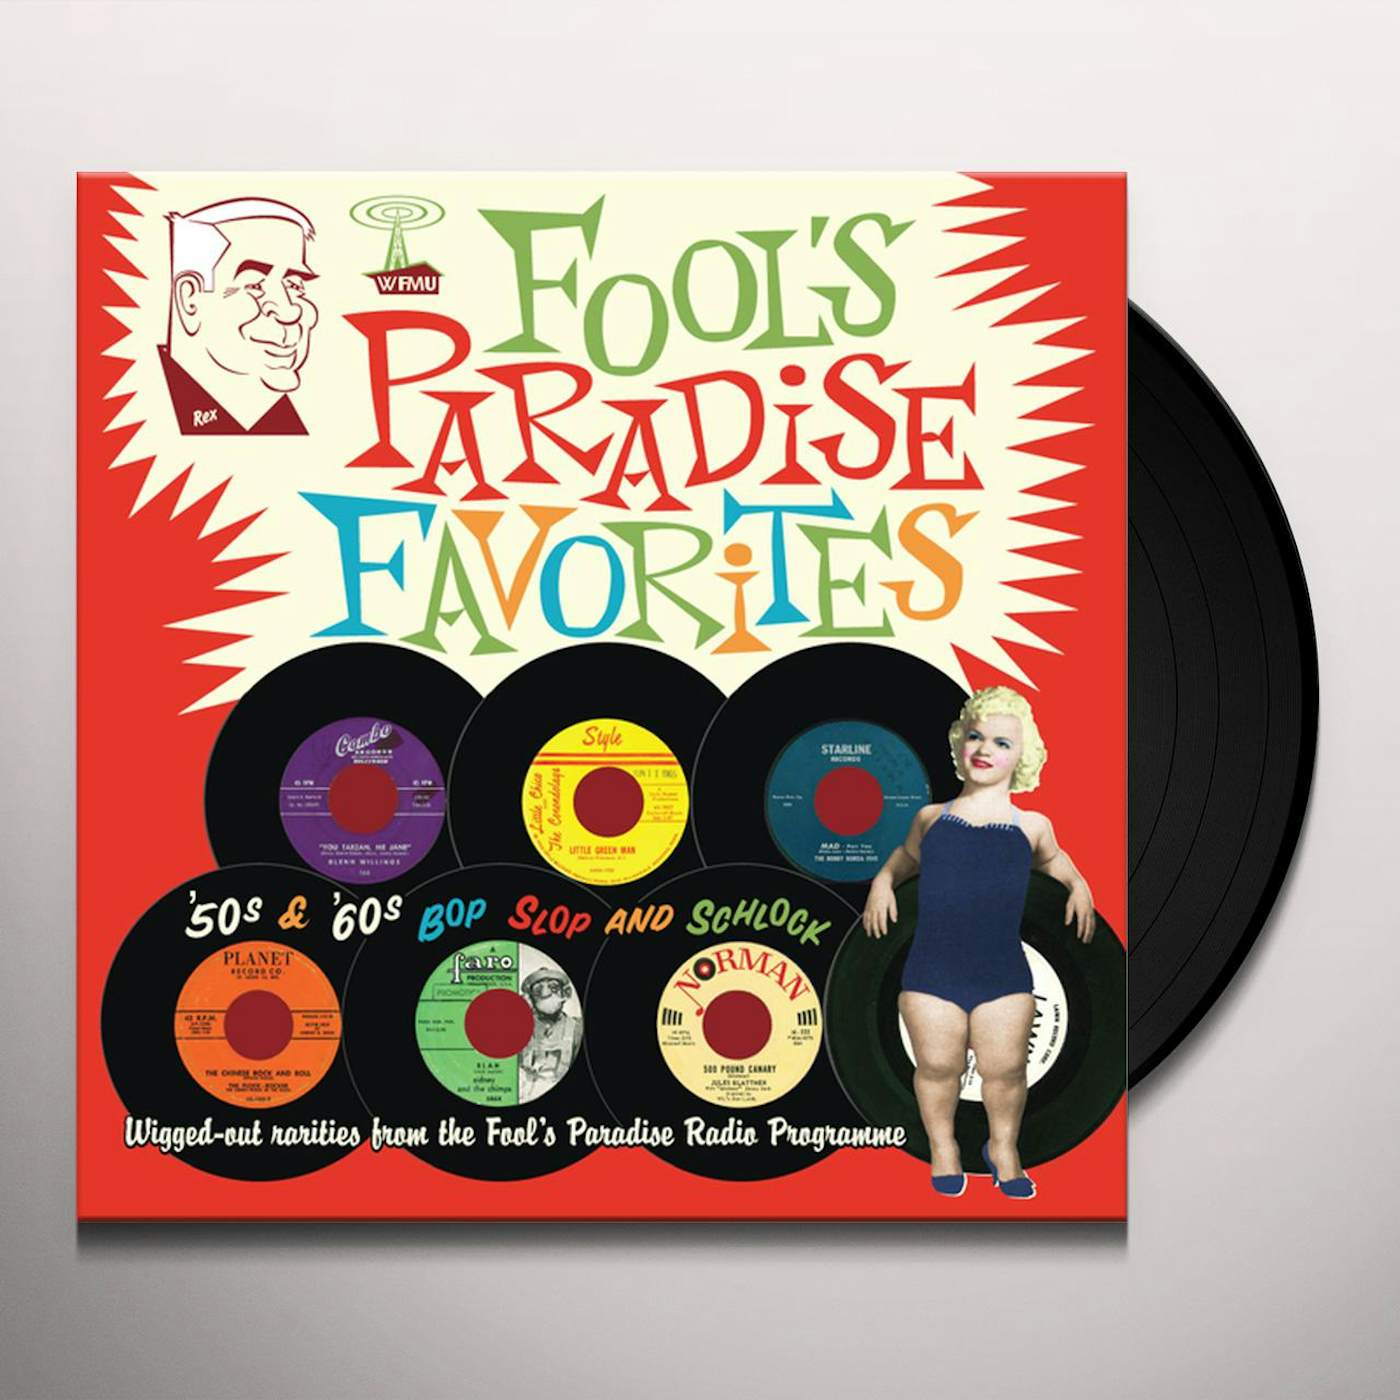 Fools Paradise Favorites / Various